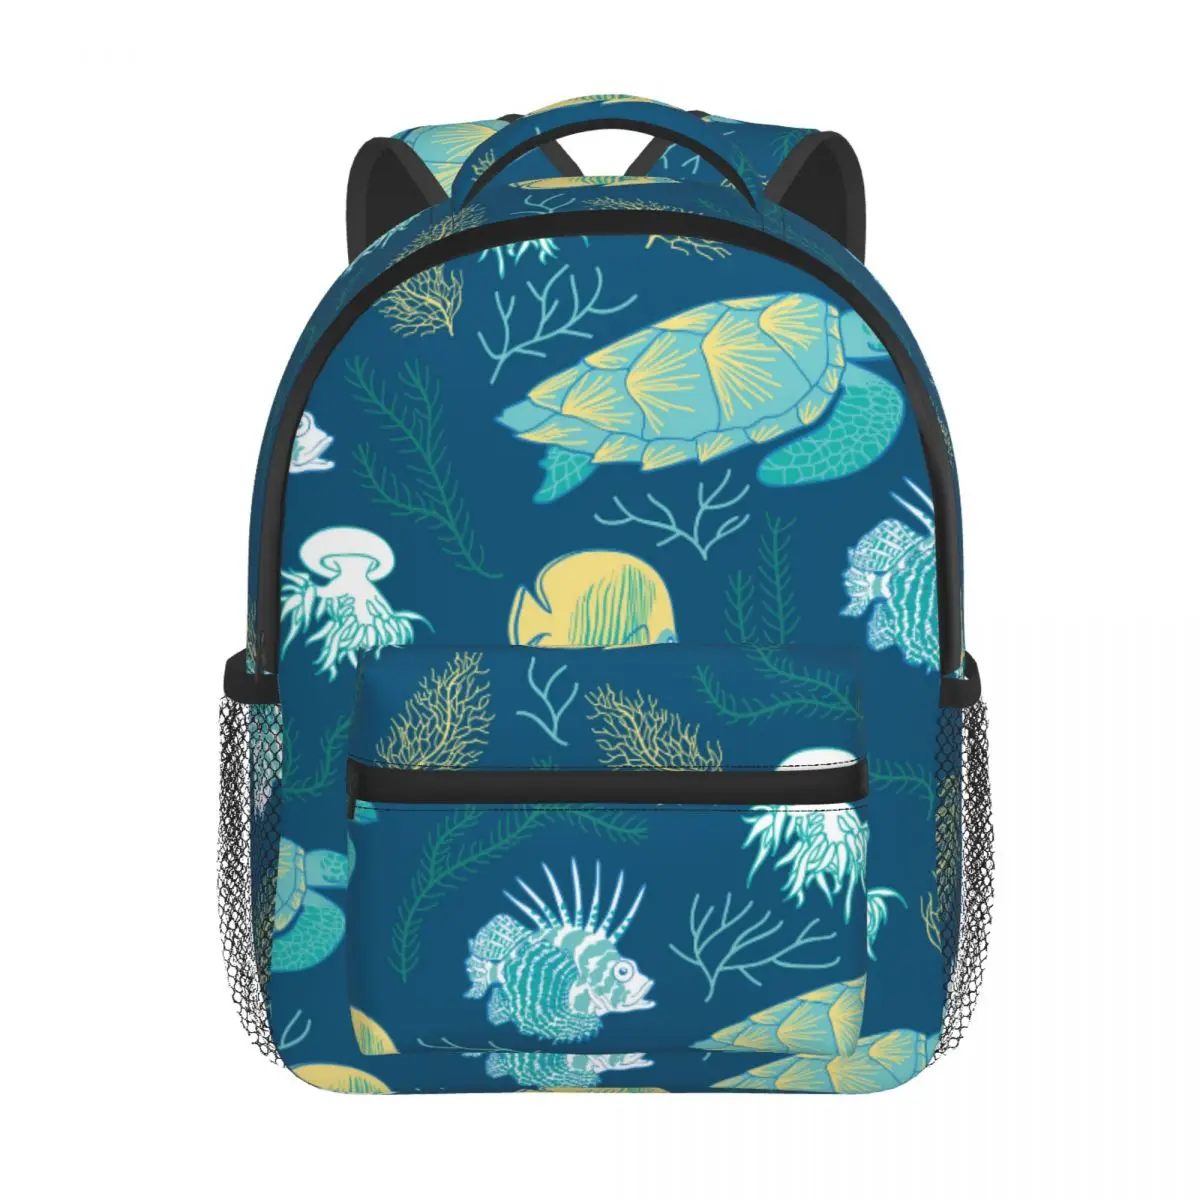 Ocean Animals Fire Fish Turtle Jellyfish Corals Kids Backpack Toddler School Bag Kindergarten Mochila for Boys Girls 2-5 Years